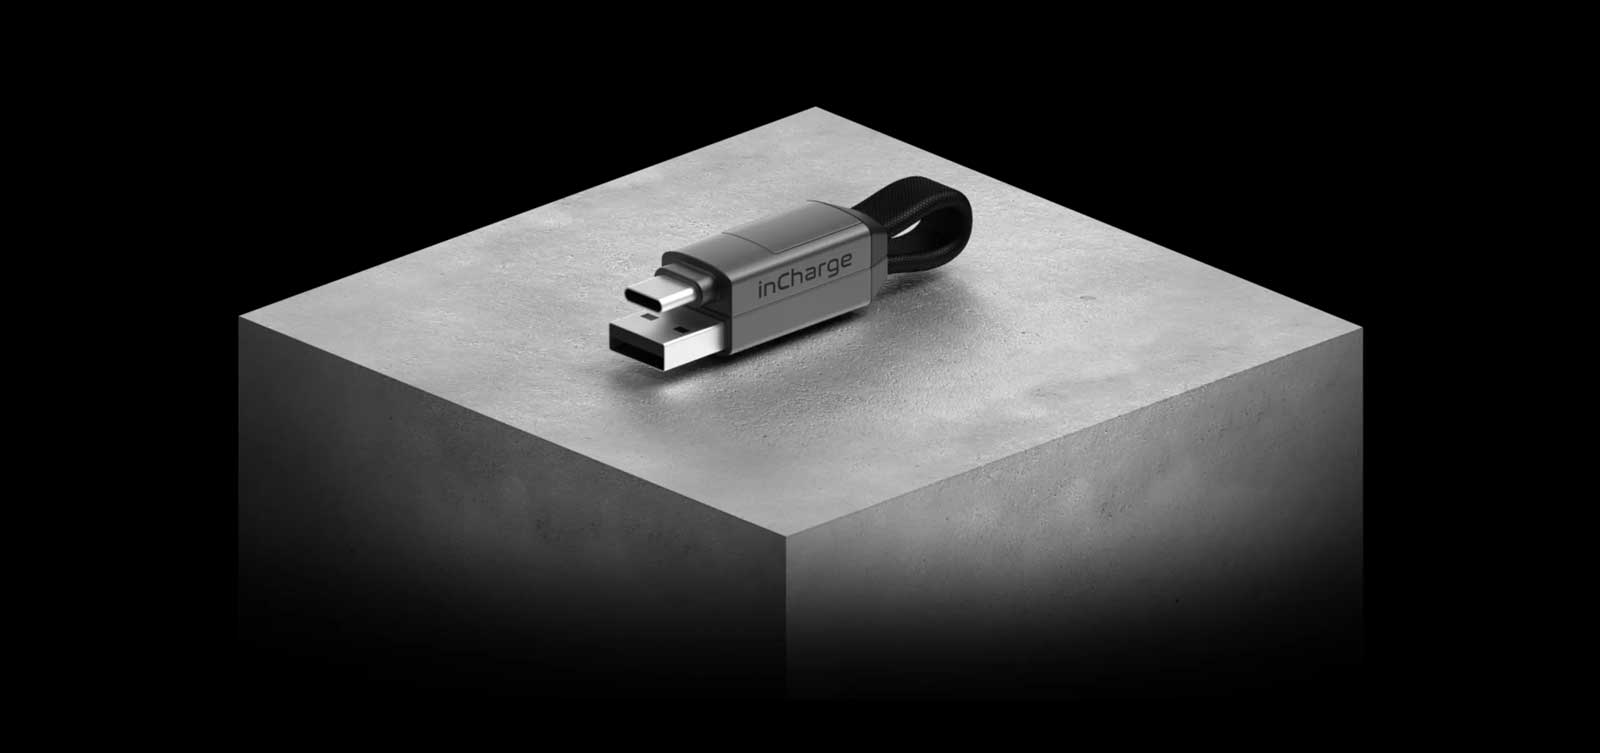 inCharge 6 the future of USB cables - Laptop Accessories Australia | Australia | PLA, PETG, CPE, TPU, TPE, Carbon, Flexiable, Carbon, HIPS, and Nylon